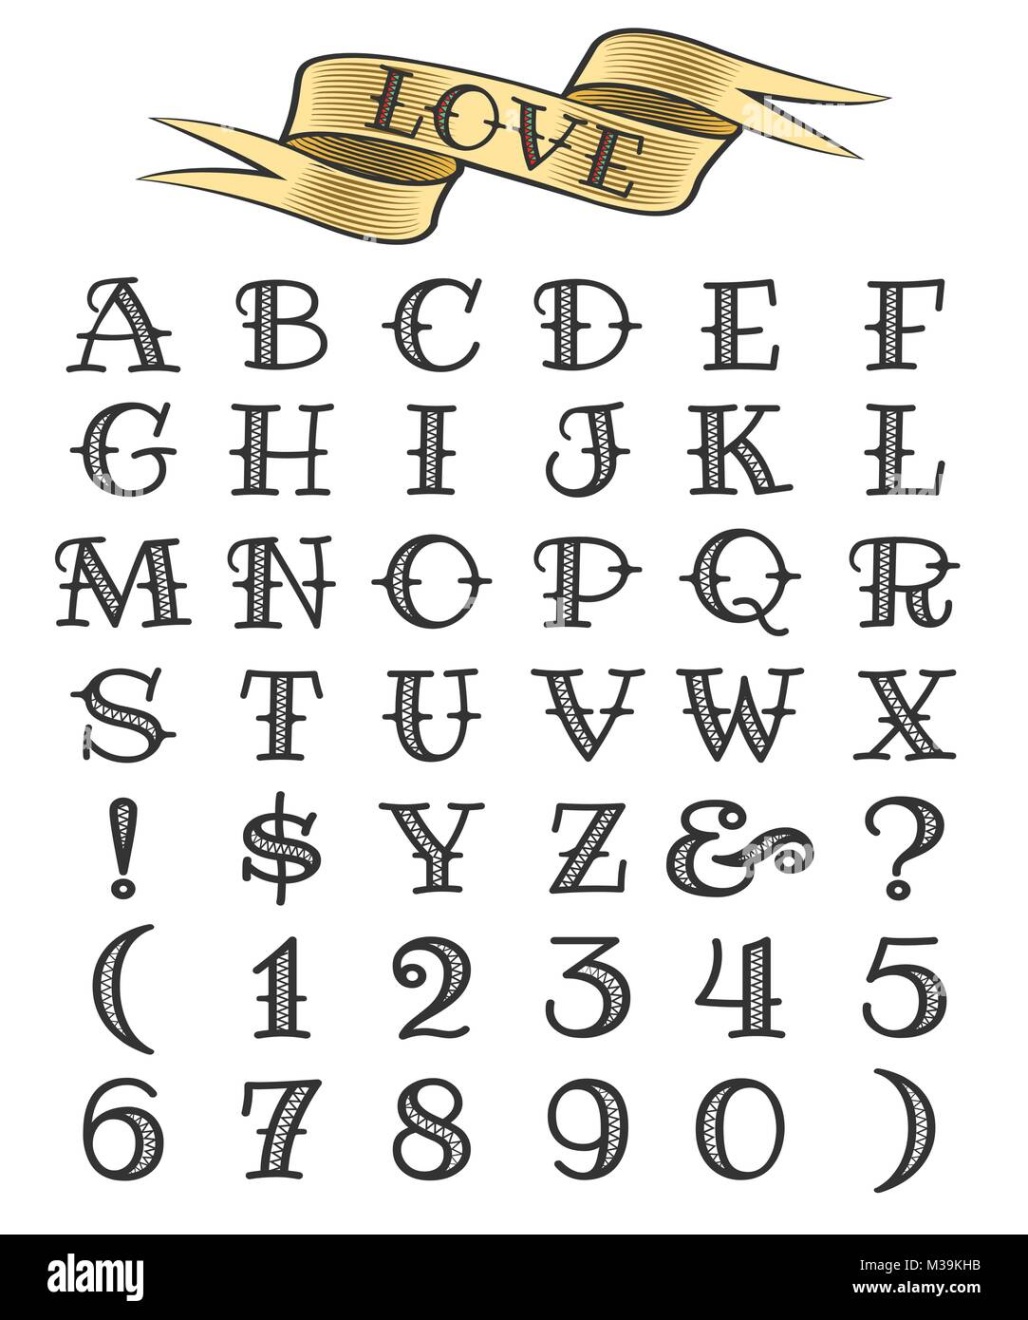 alphabet letters tattoo designs Bulan 1 Set of tattoo style letters and numbers, alphabeth for your tattoo